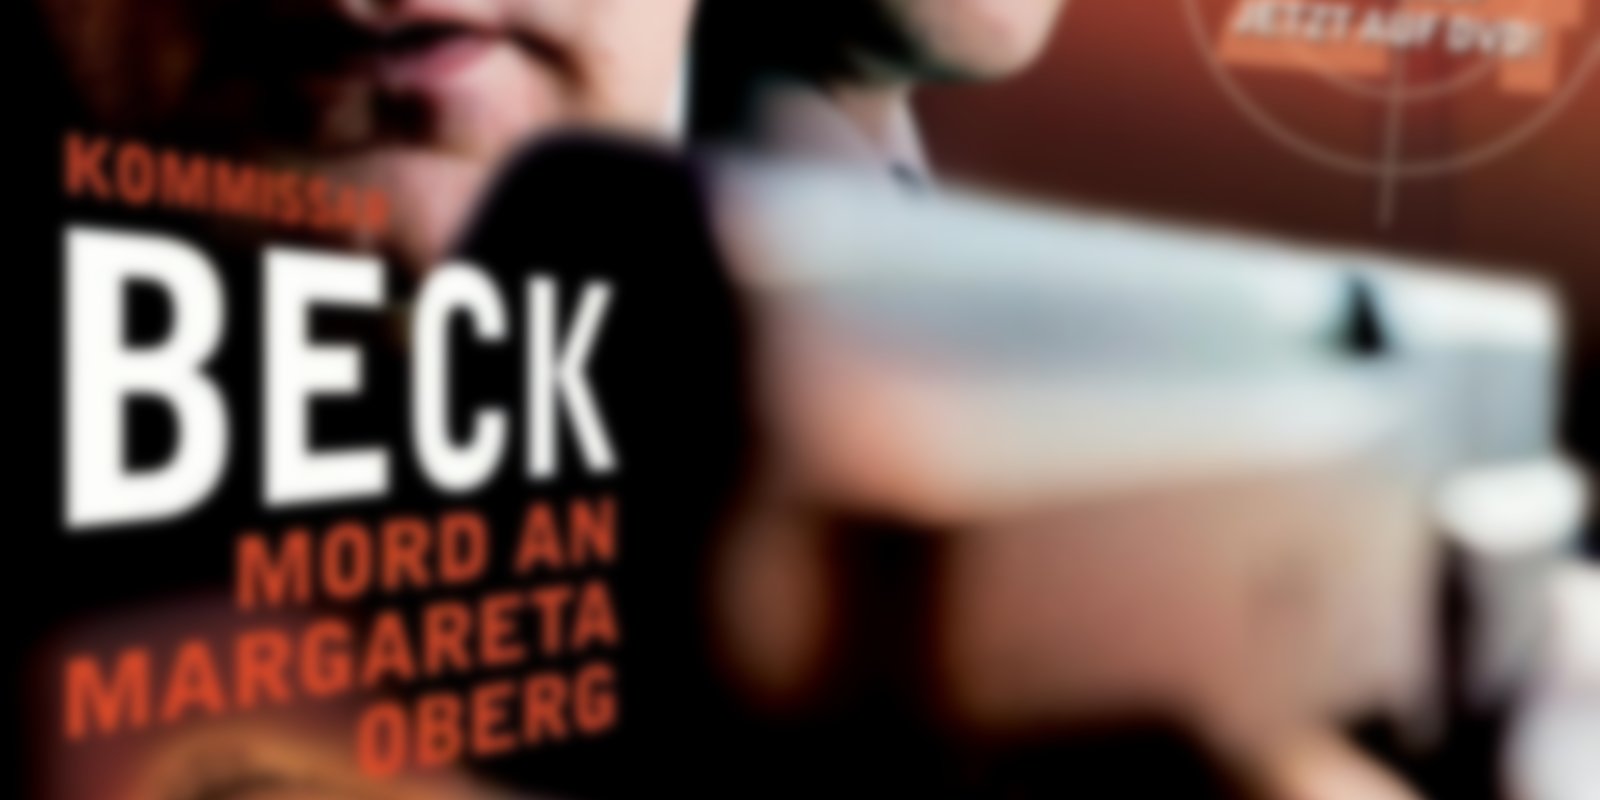 Kommissar Beck - Mord an Margareta Oberg